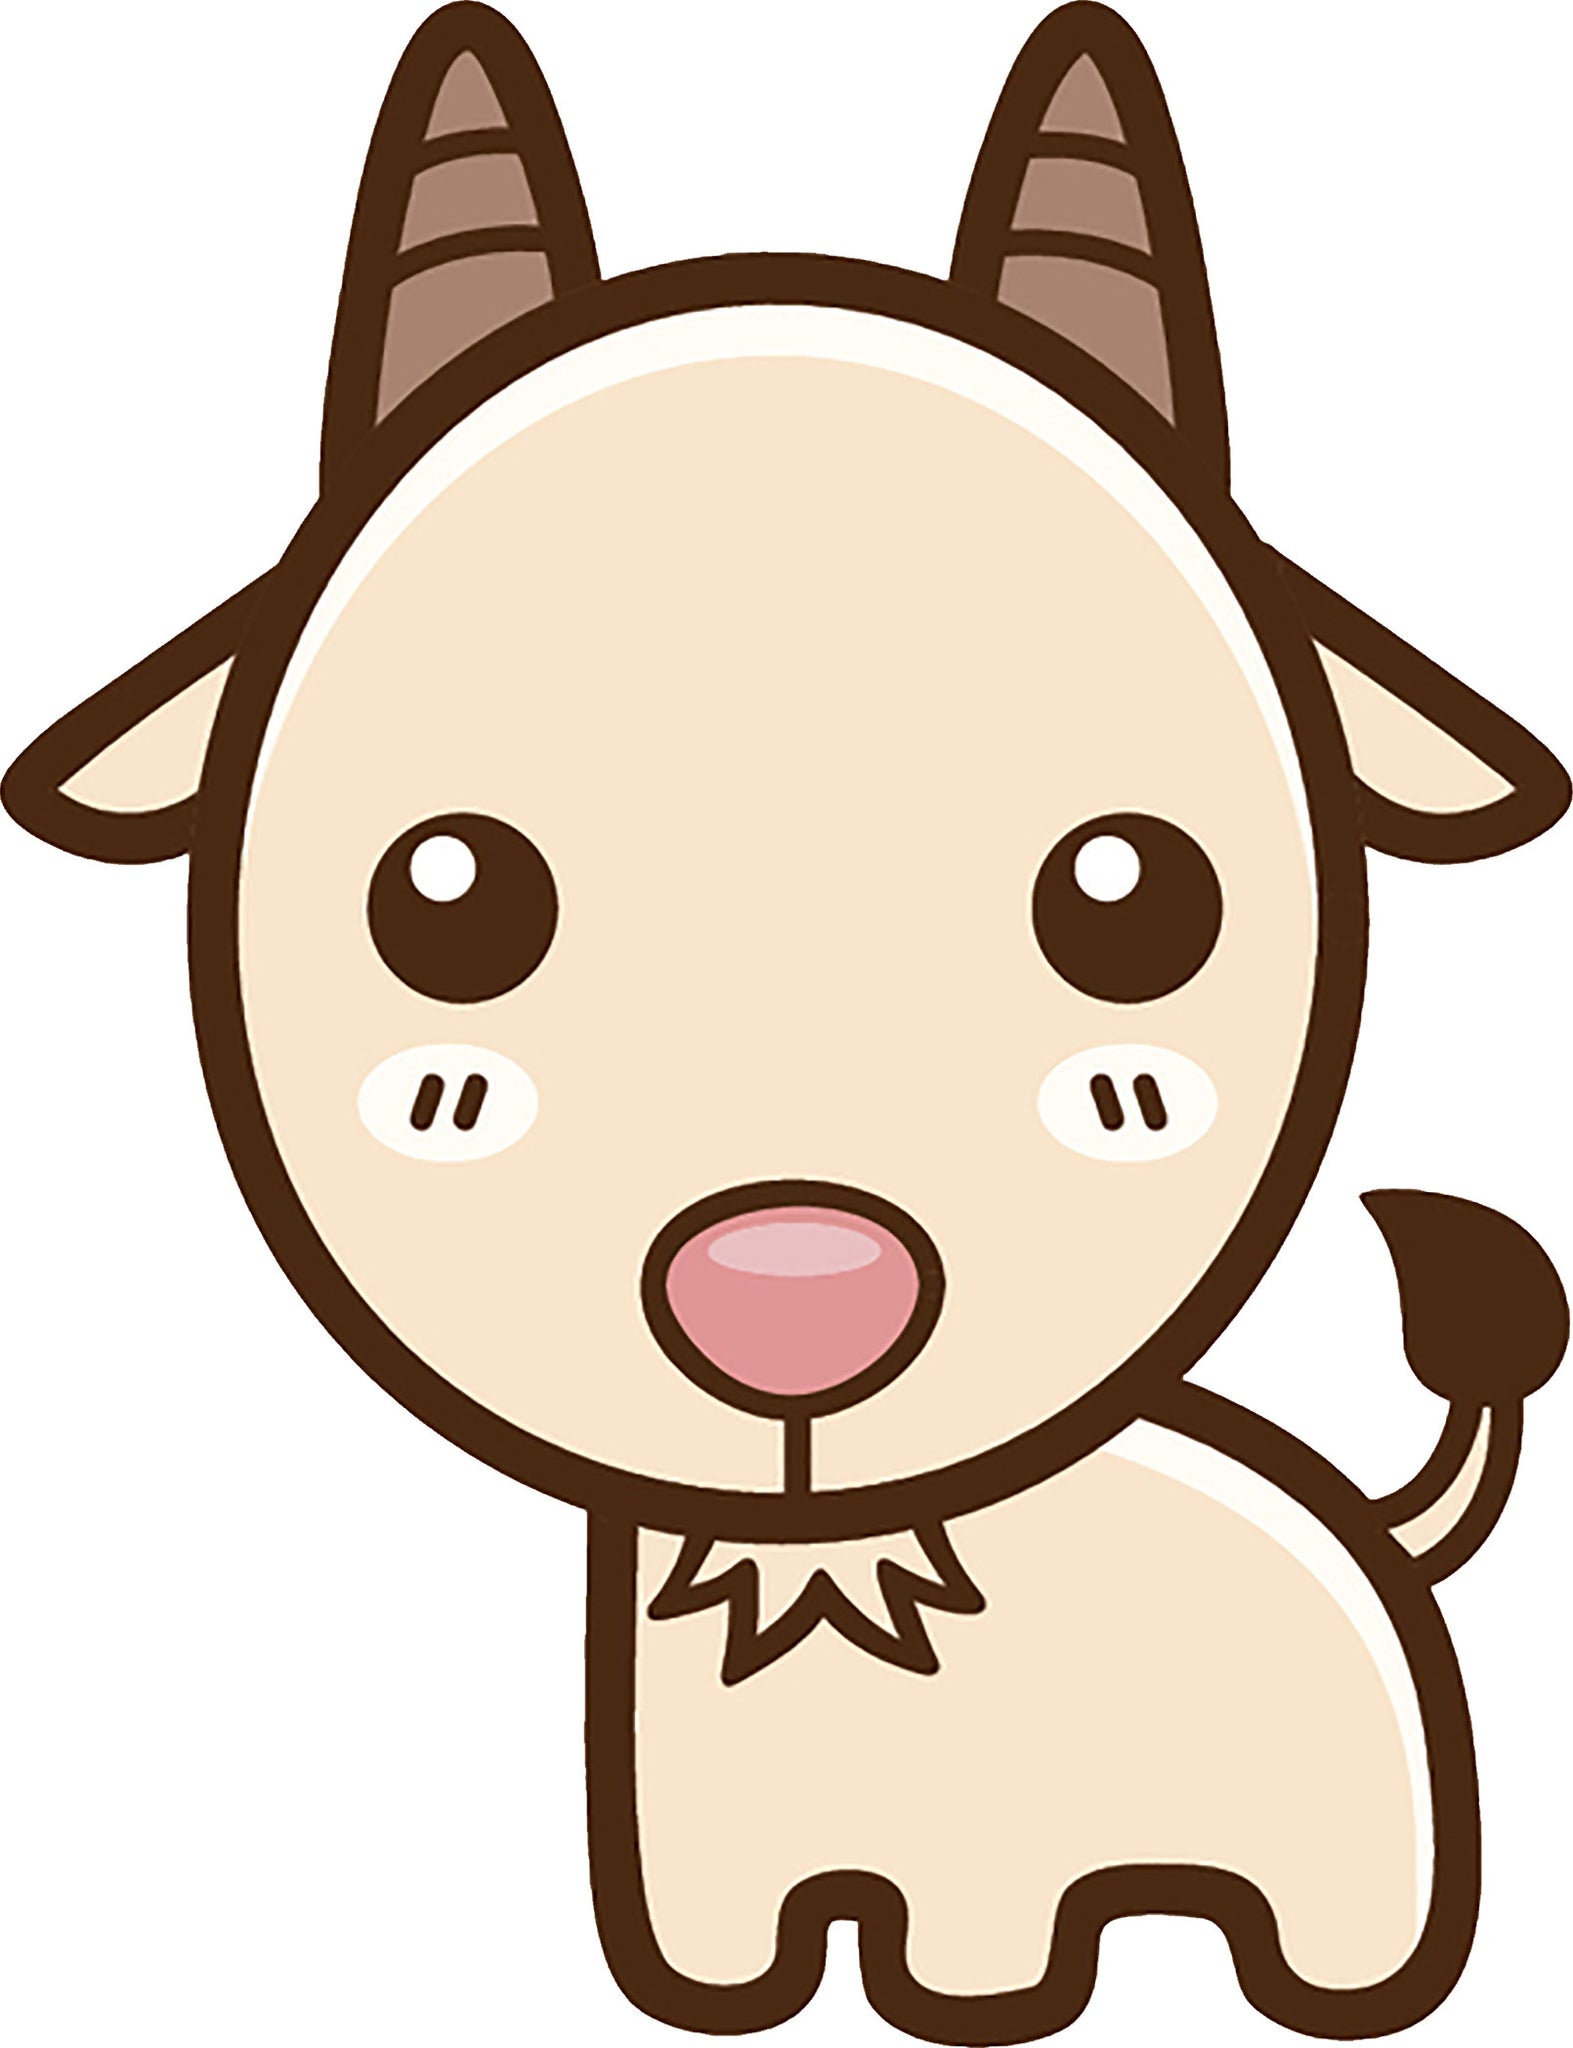 Cute Simple Kawaii Animal Cartoon Icon - Goat Vinyl Decal Sticker